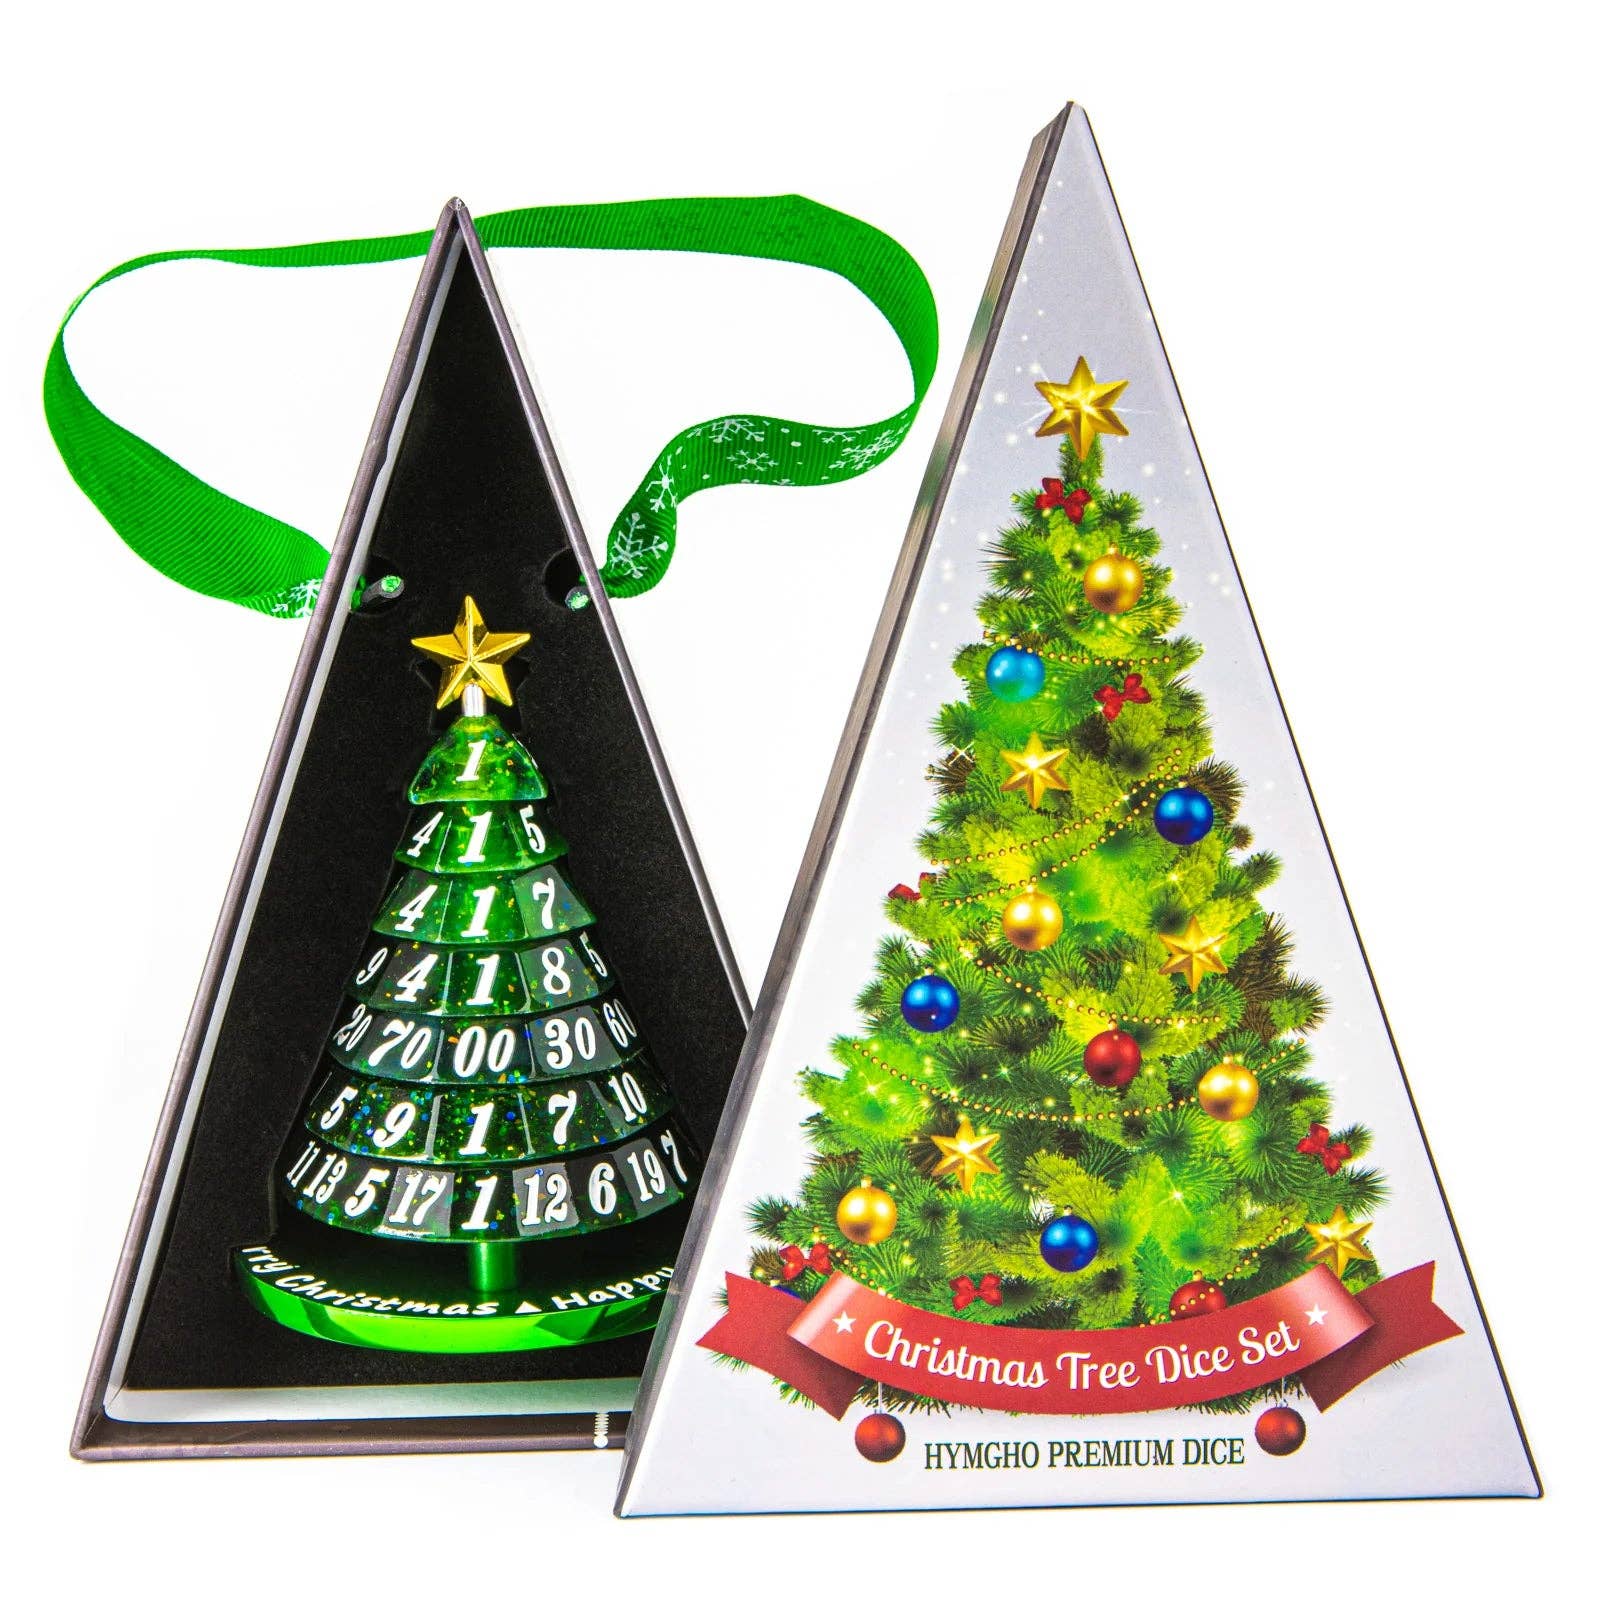 Hymgho Premium Dice - Resin Christmas Tree Dice - Green